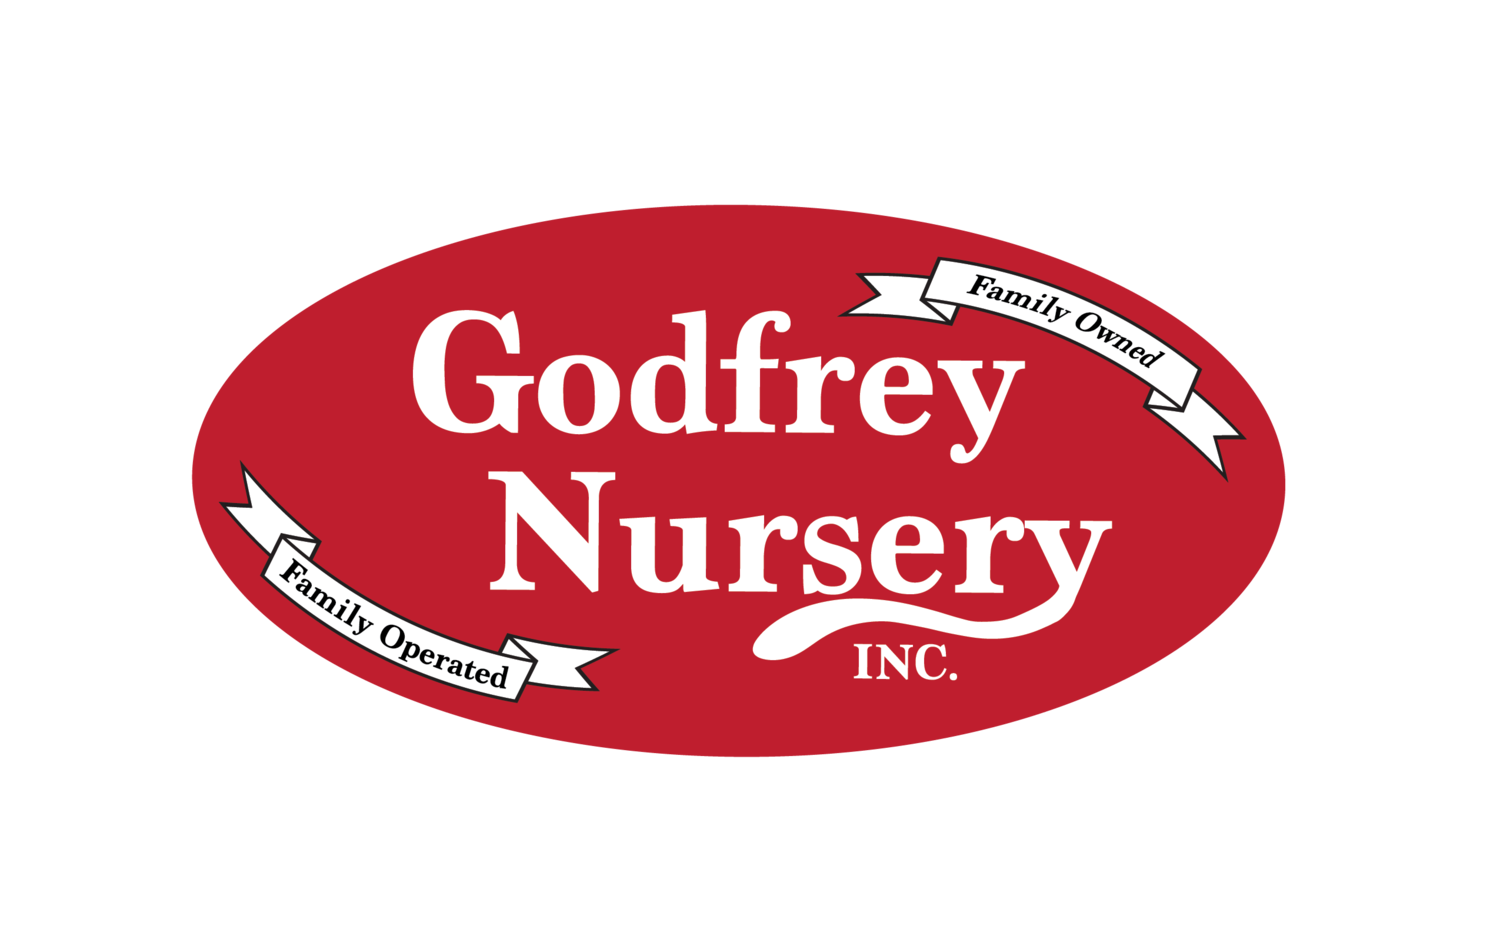 Business logo of Godfrey Nursery